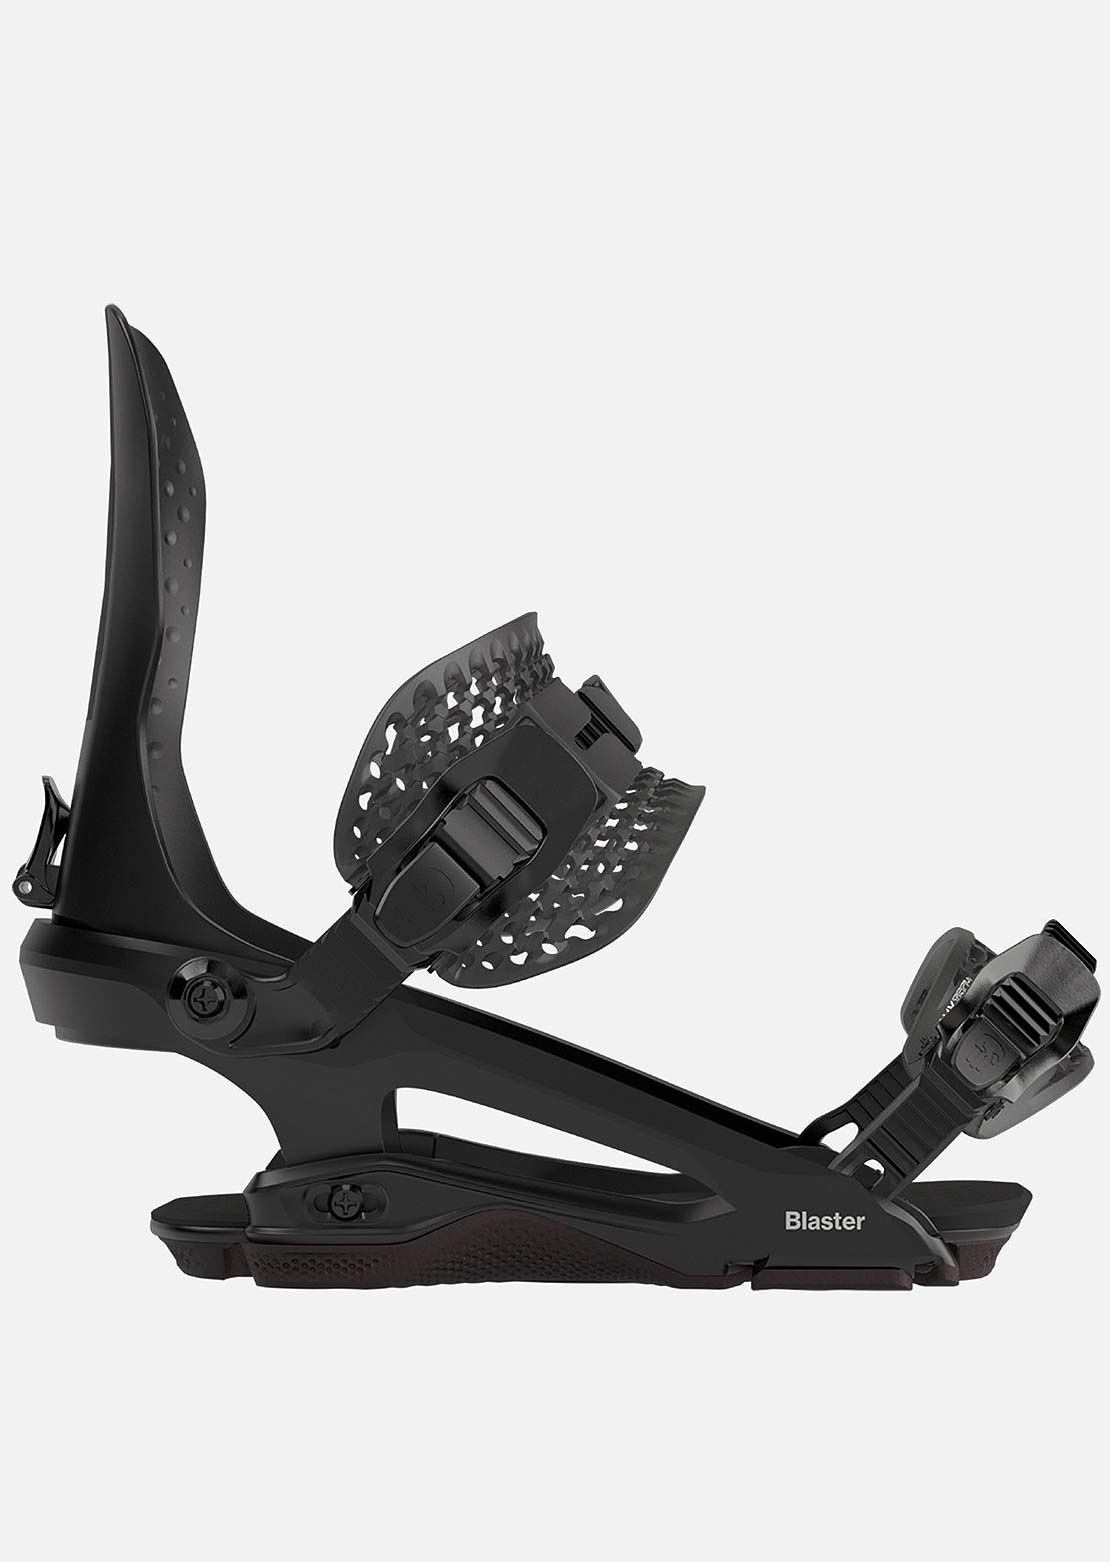 Bataleon Unisex Blaster FW Snowboard Bindings Black